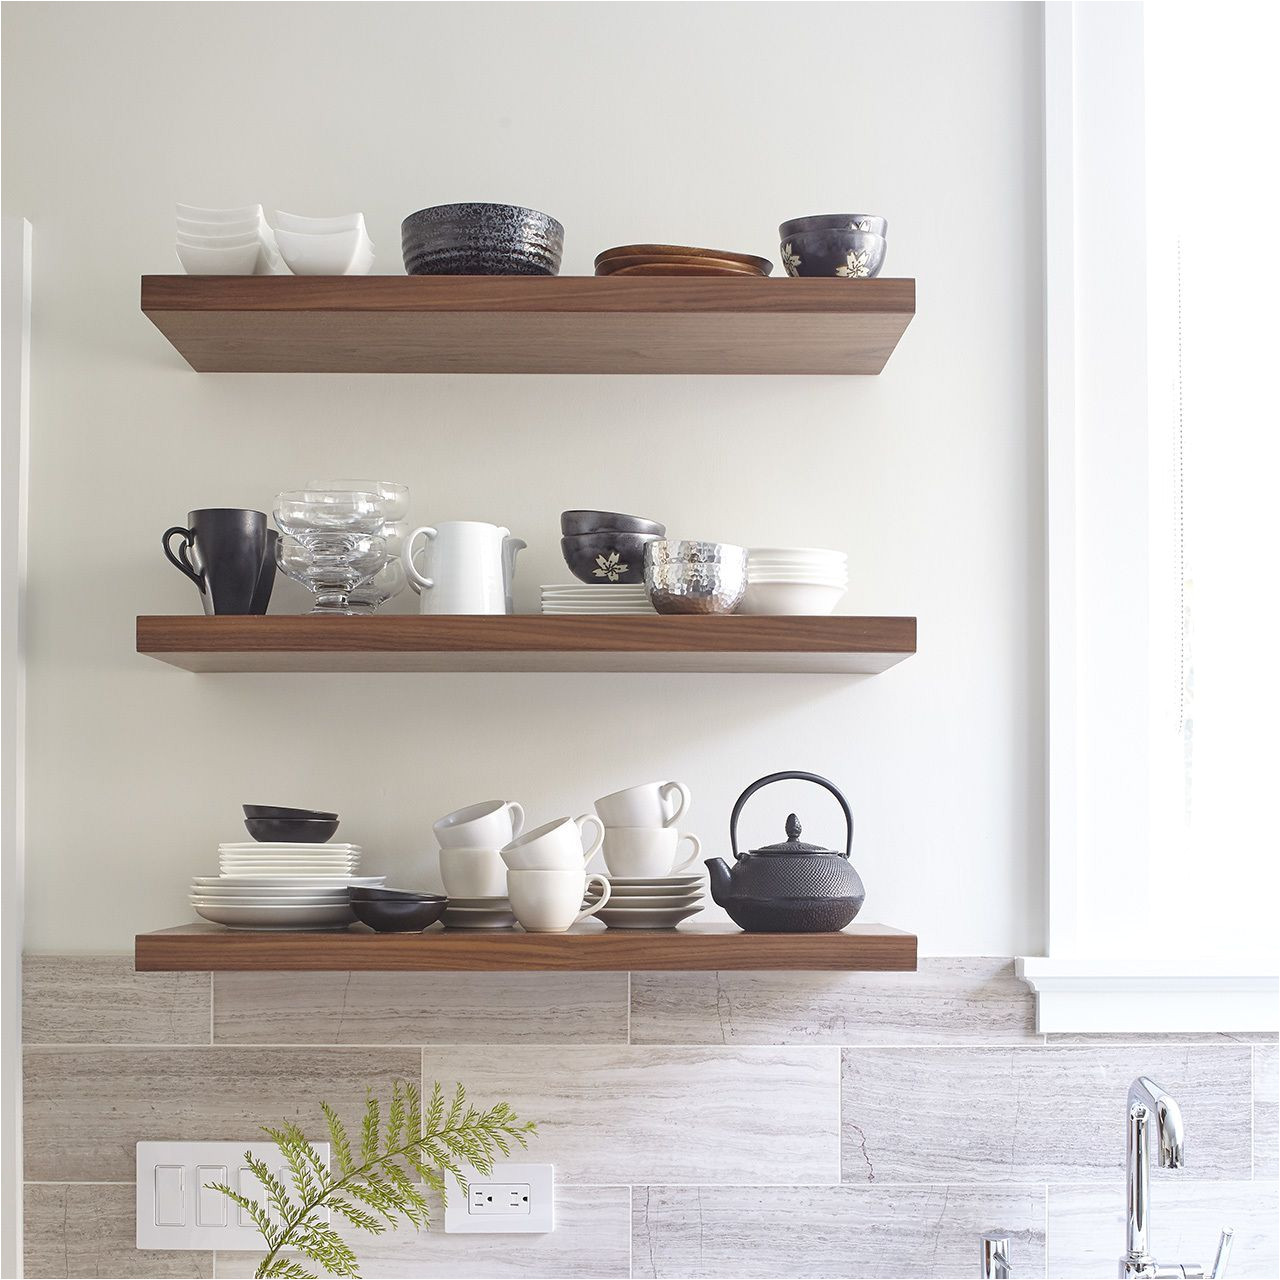 designer floating shelves for the kitchen floatingshelvesideasbuiltins